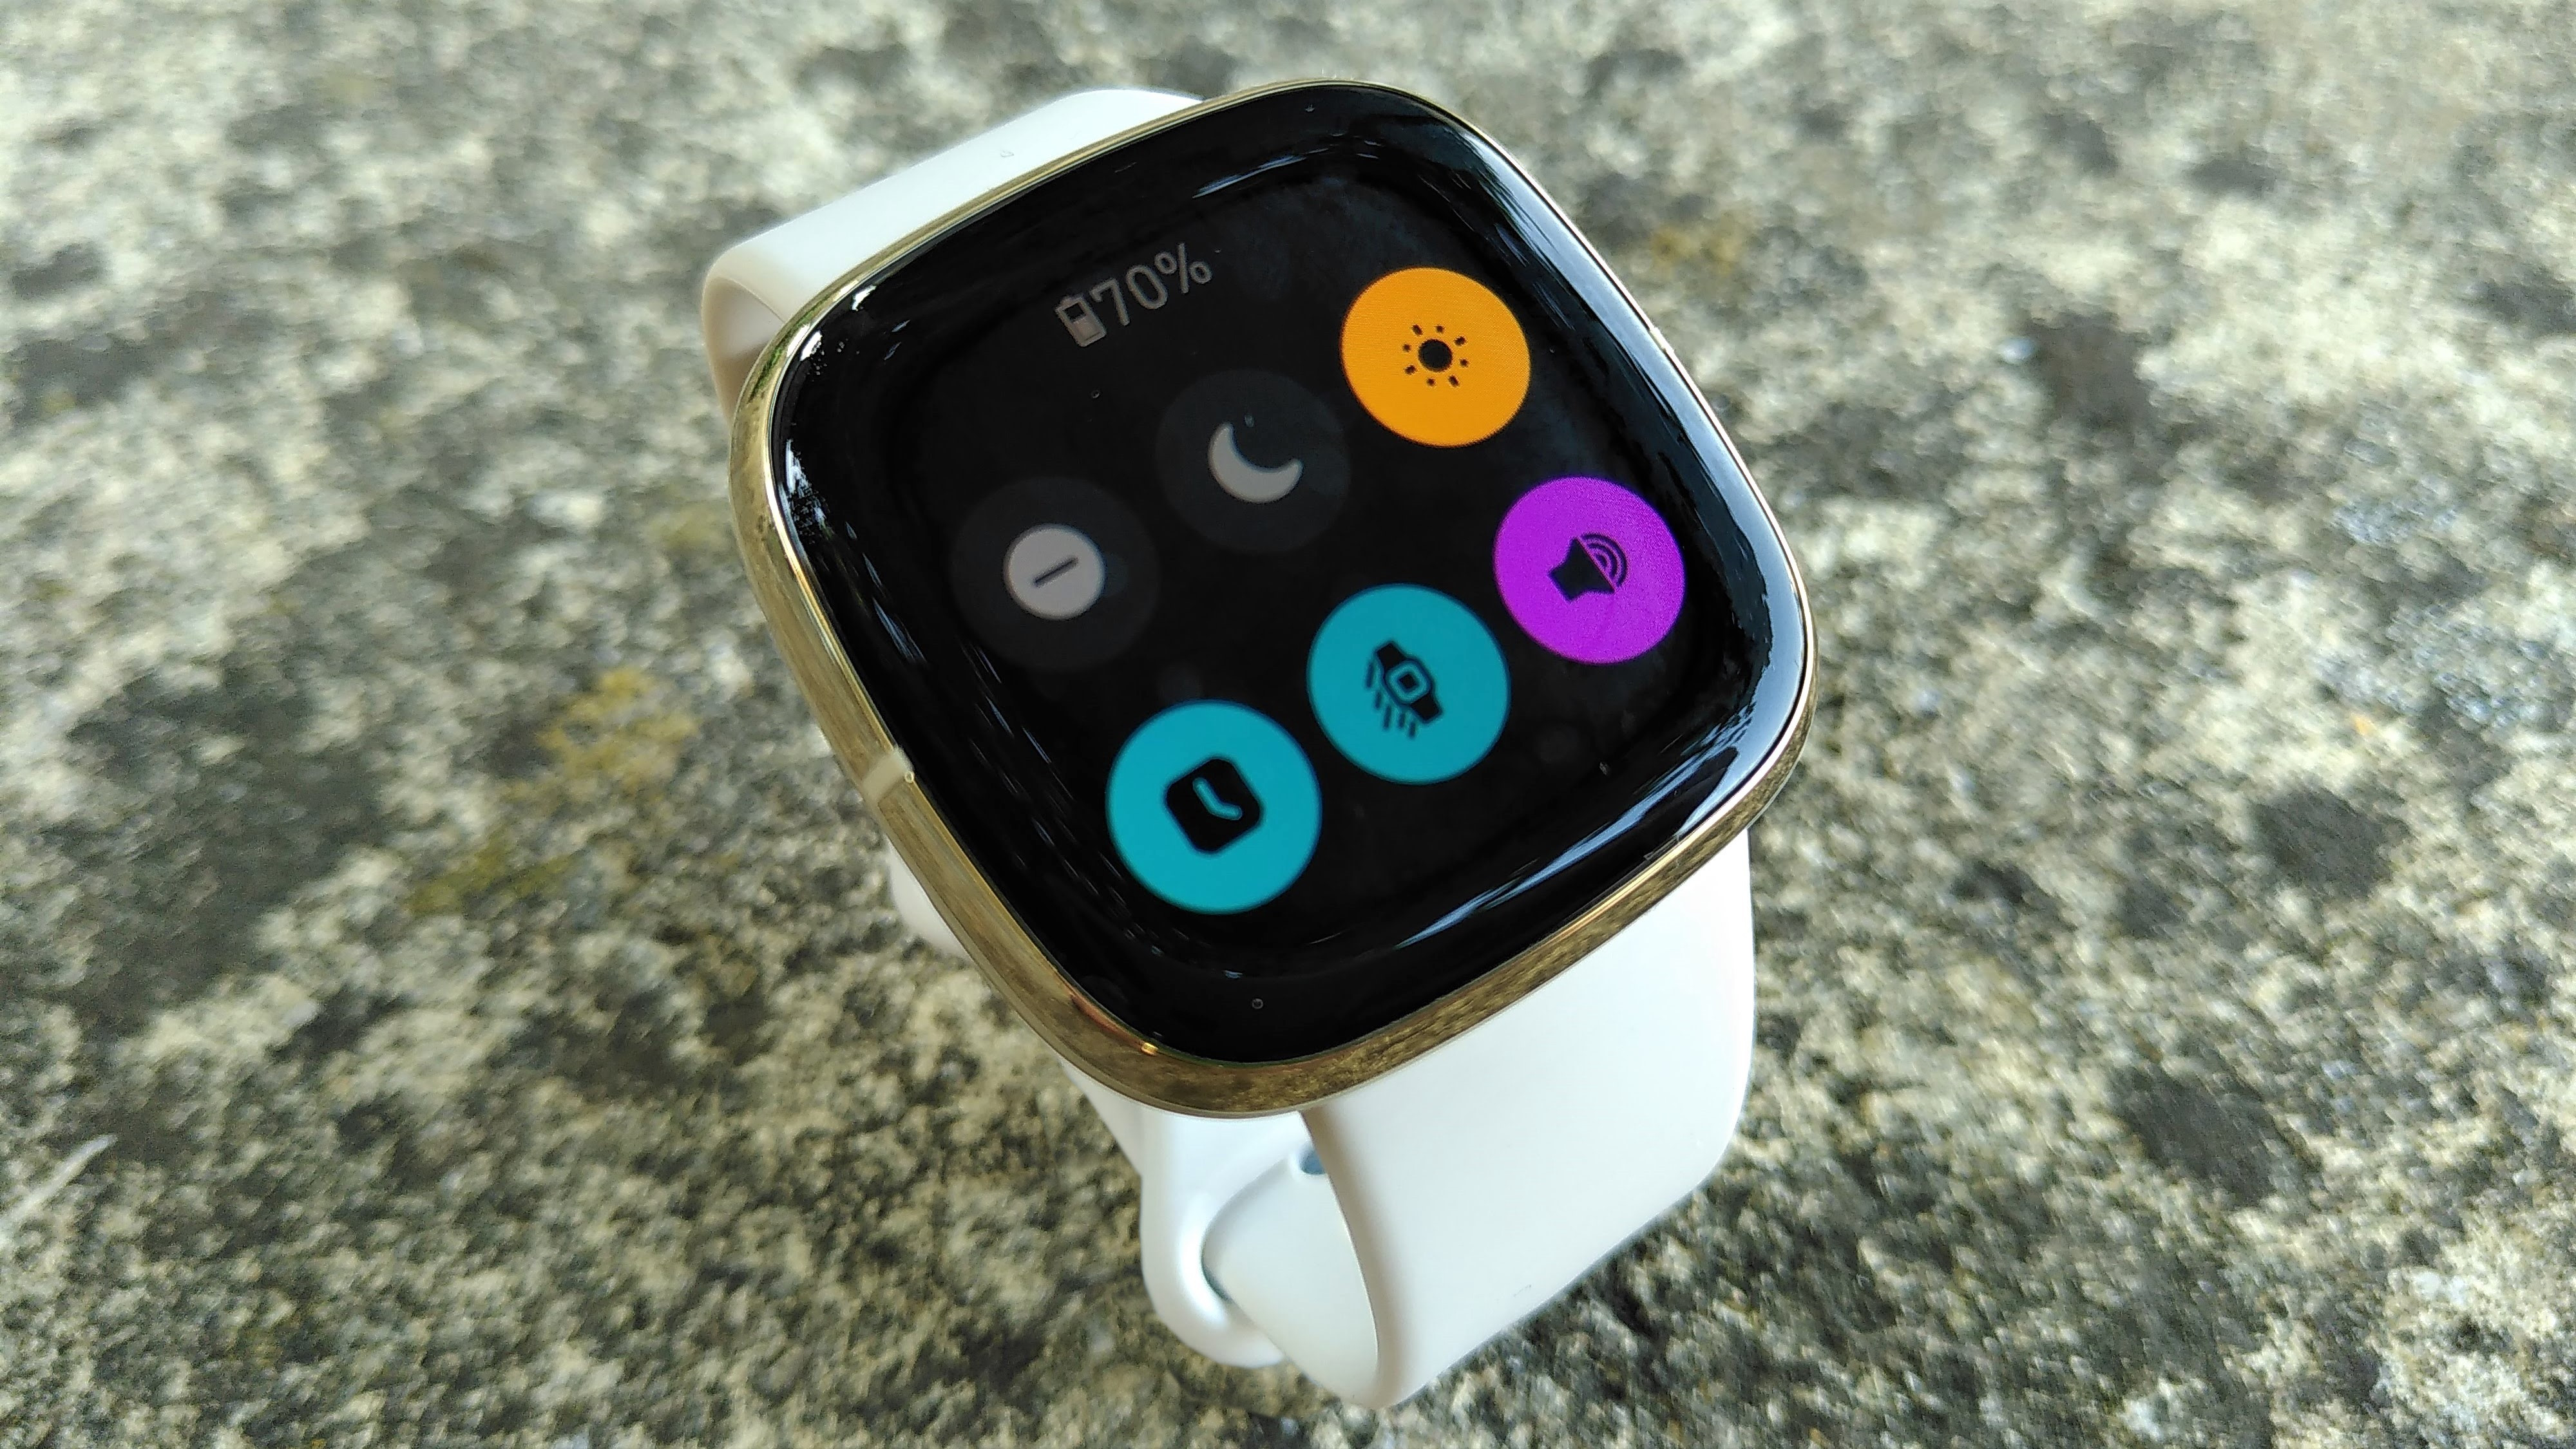 Fitbit Sense watch showing options menu